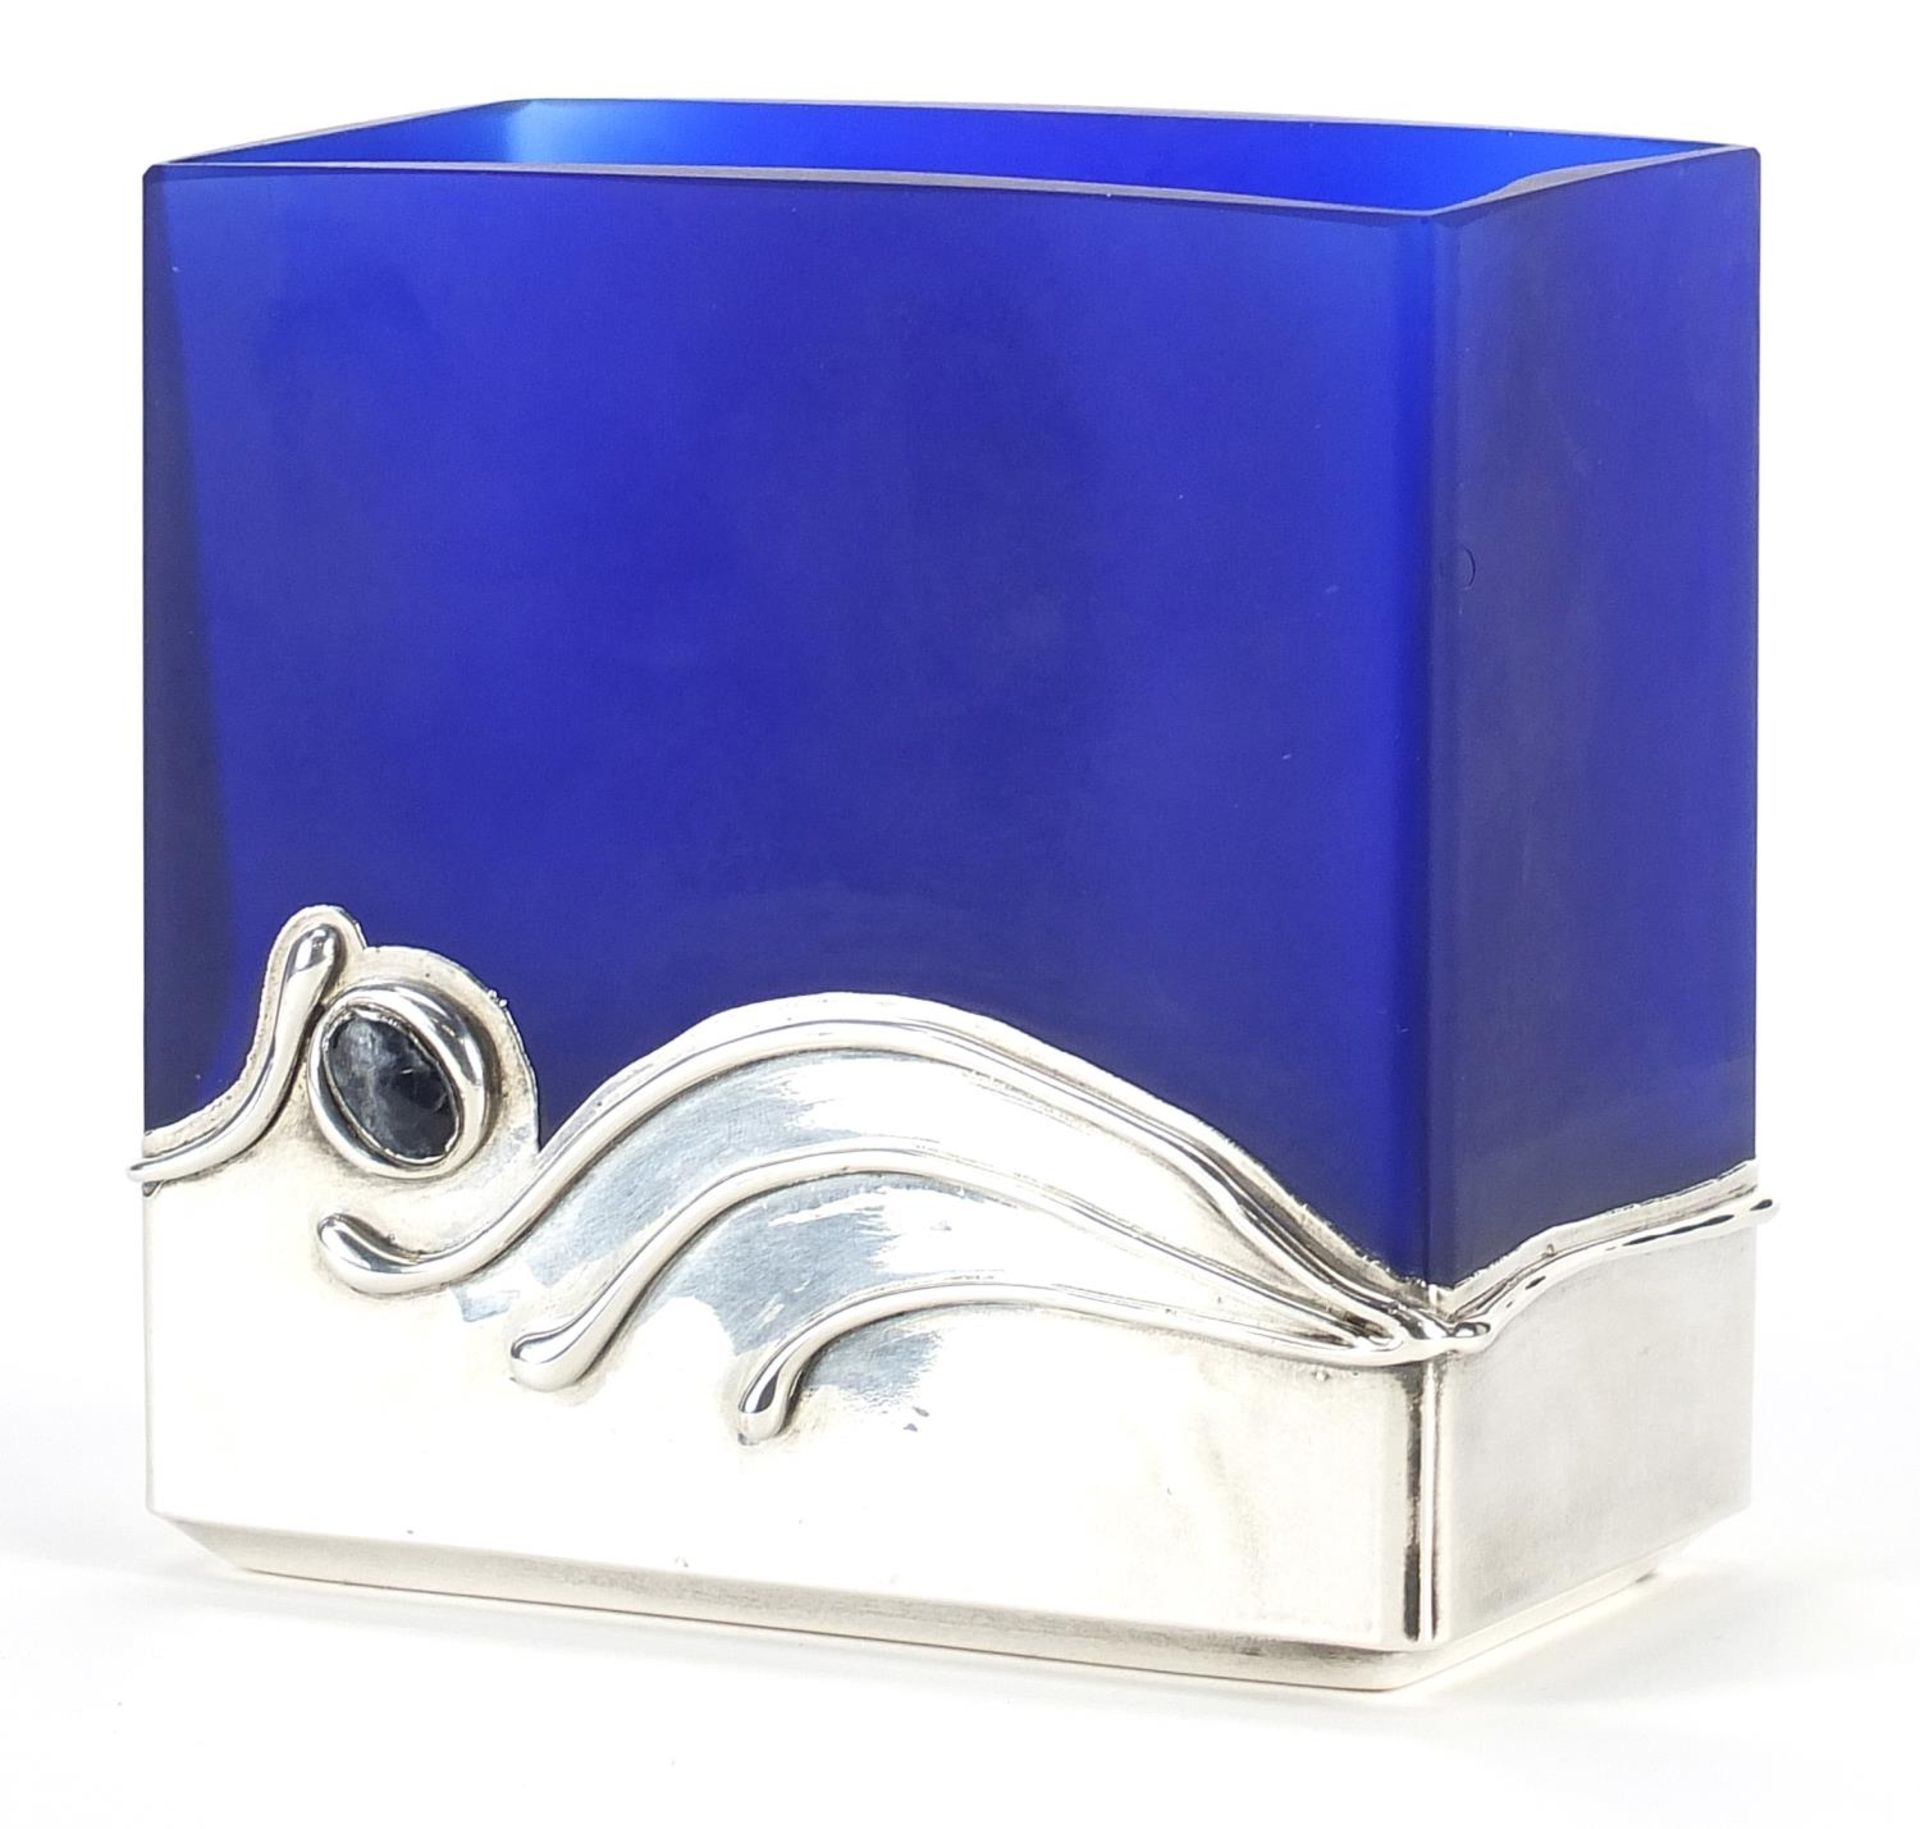 David Barah, silver mounted blue glass vase, 11cm high